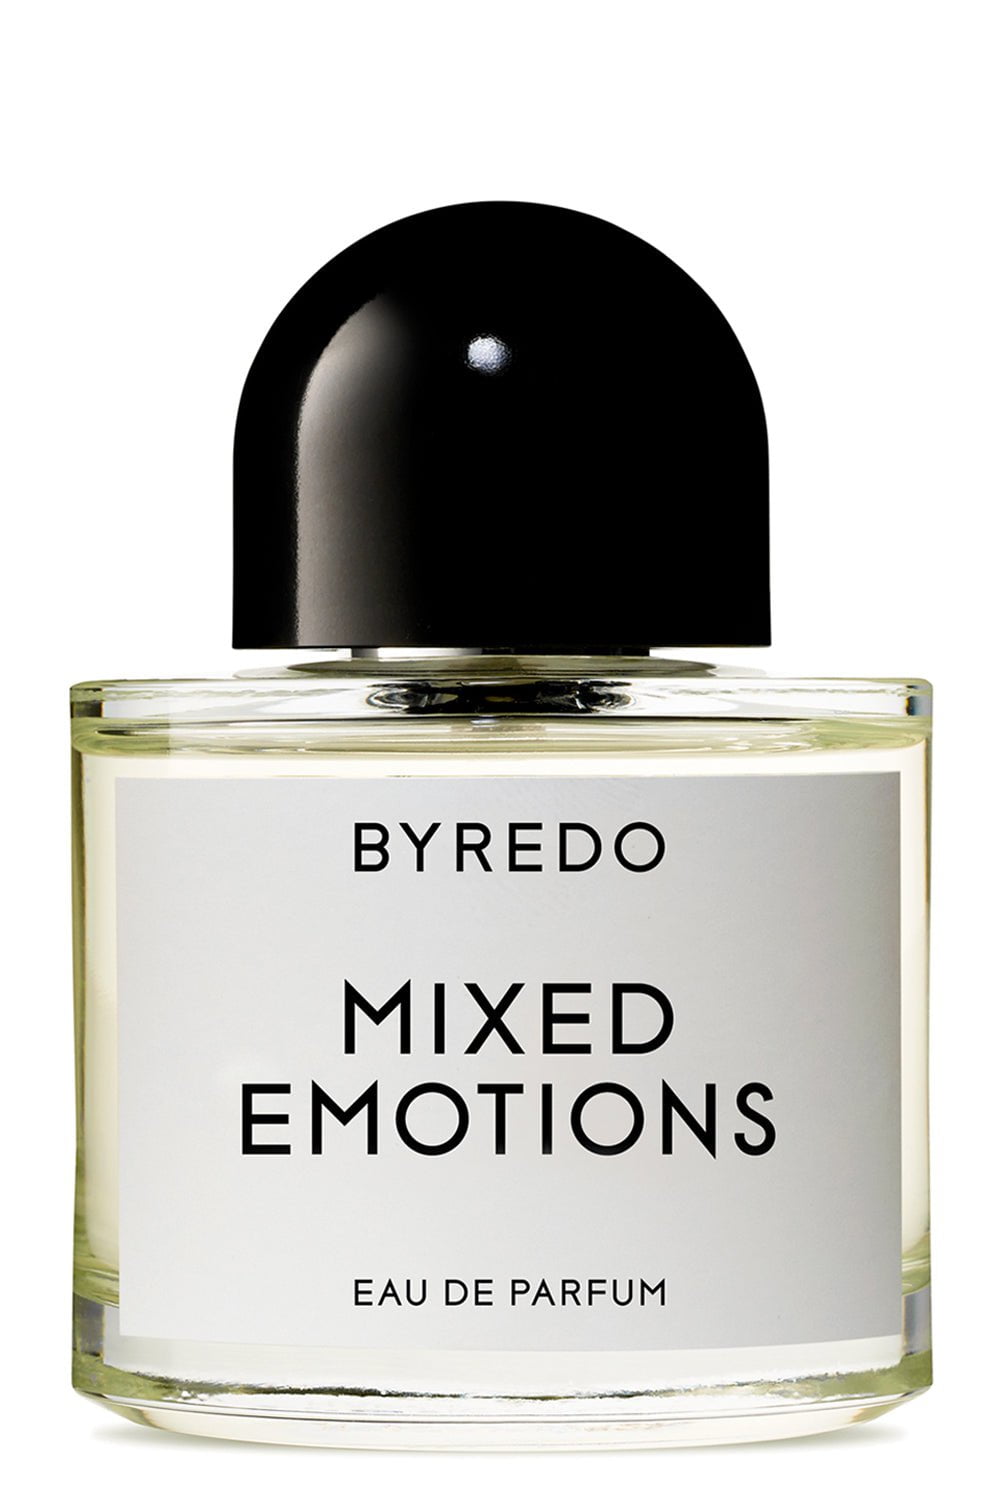 Mixed Emotions - 50ml BEAUTYFRAGRAN BYREDO   